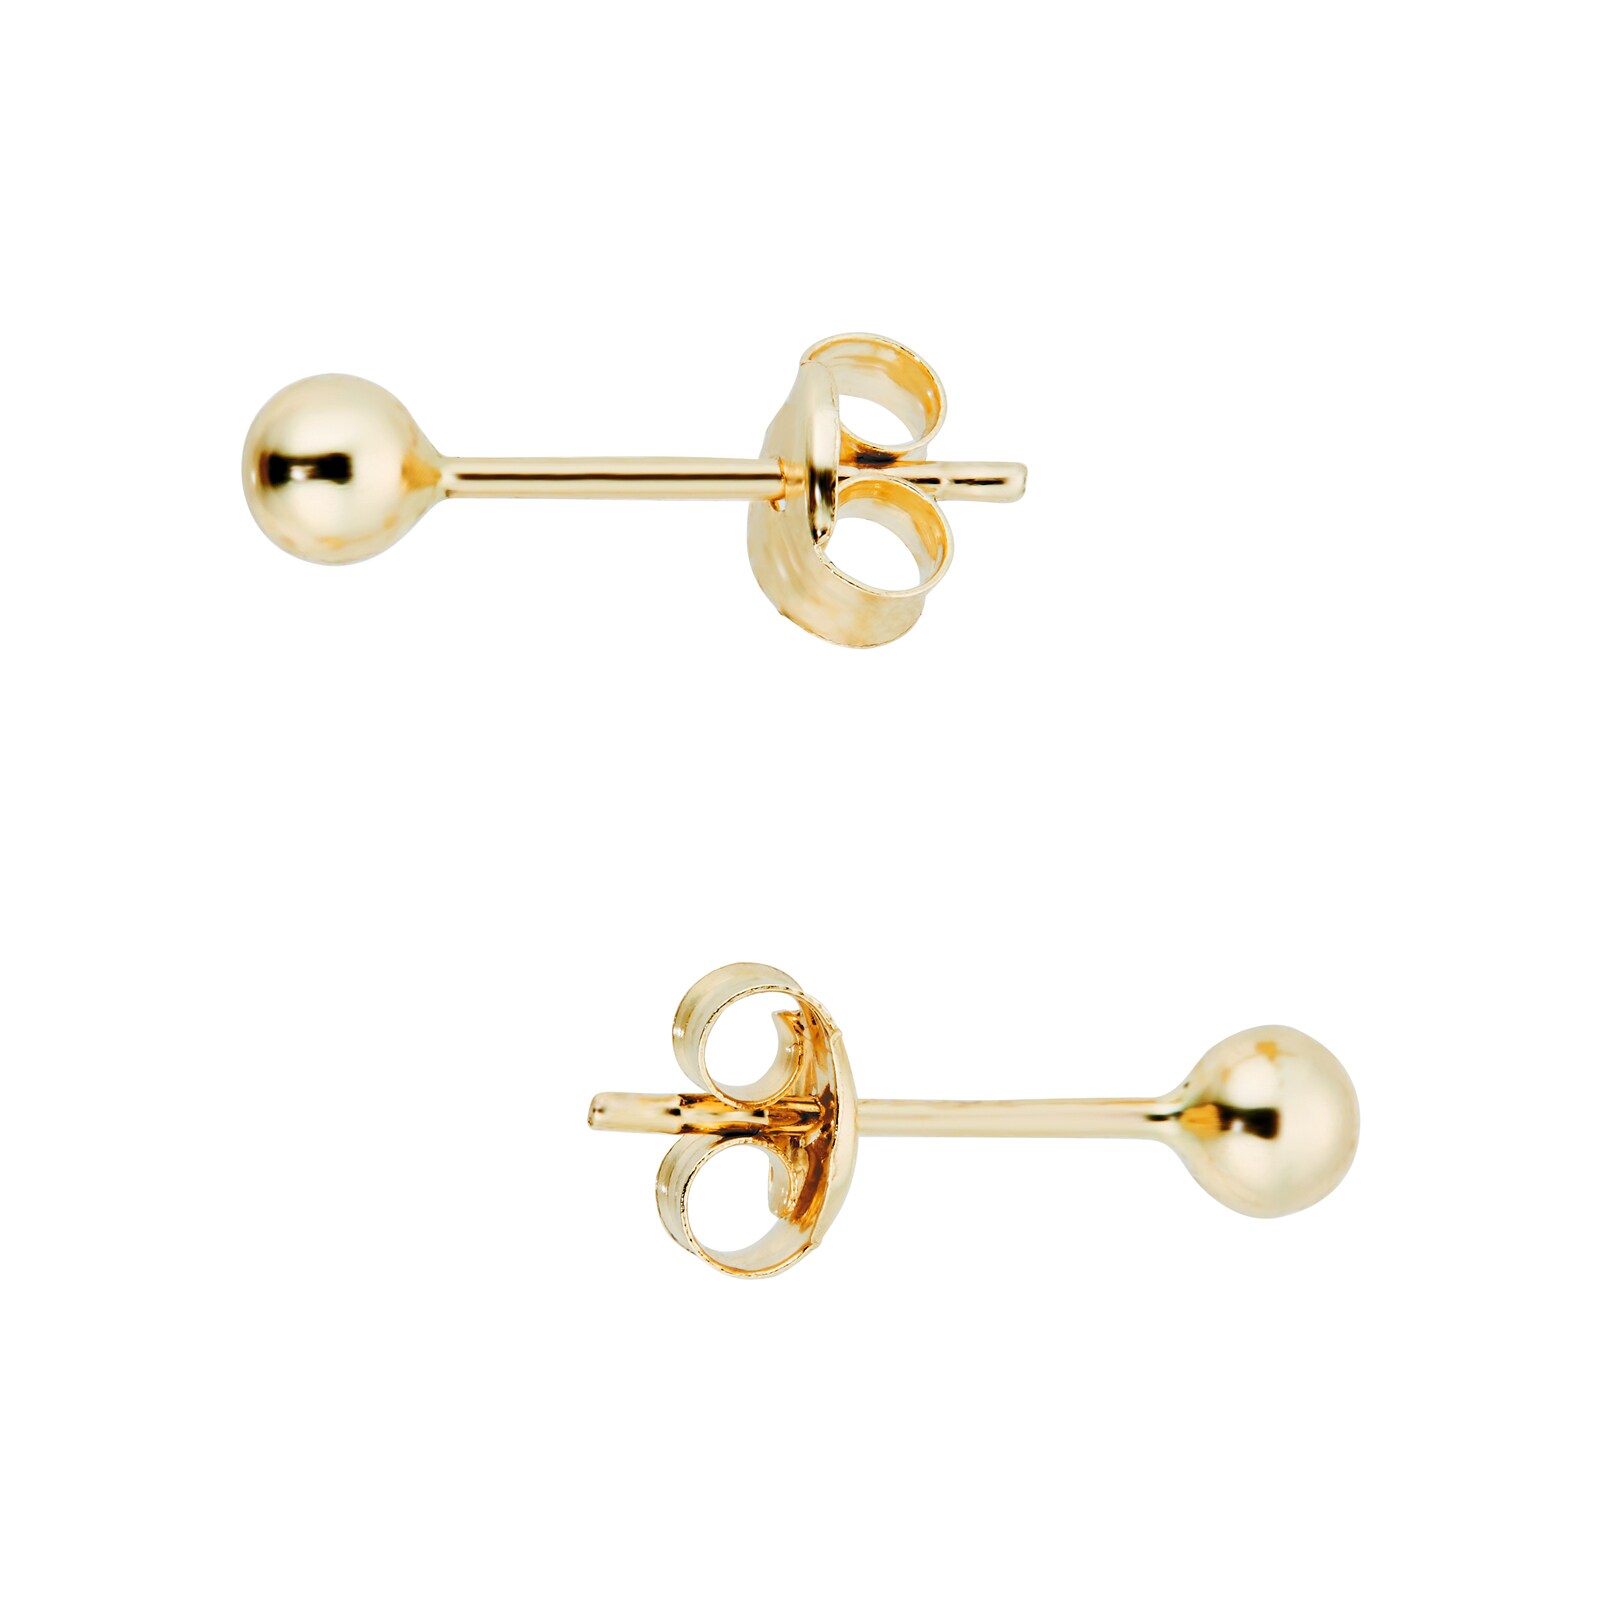 14K Gold Plated Ball Stud Earrings Sterling Silver Ball Earrings stud 3MM12MM   eBay